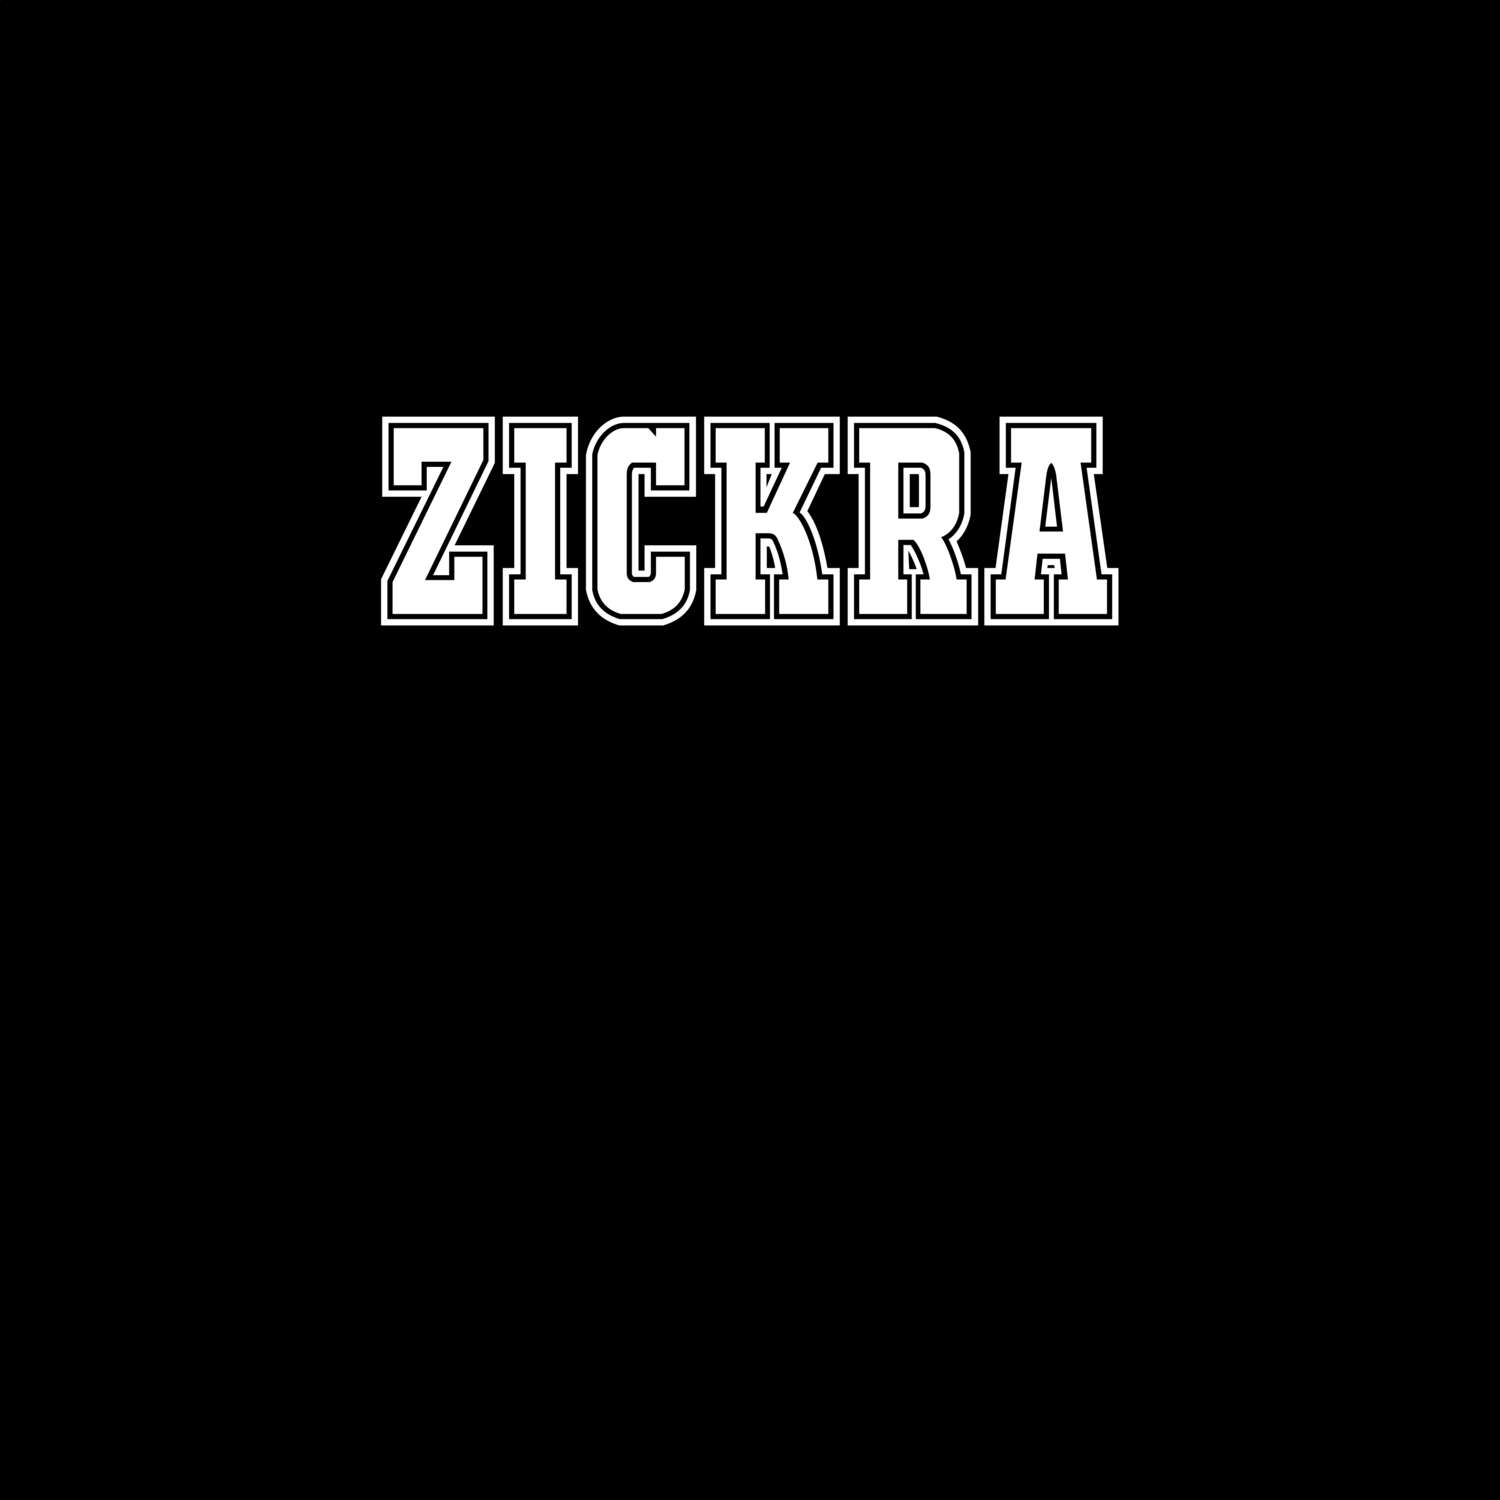 Zickra T-Shirt »Classic«